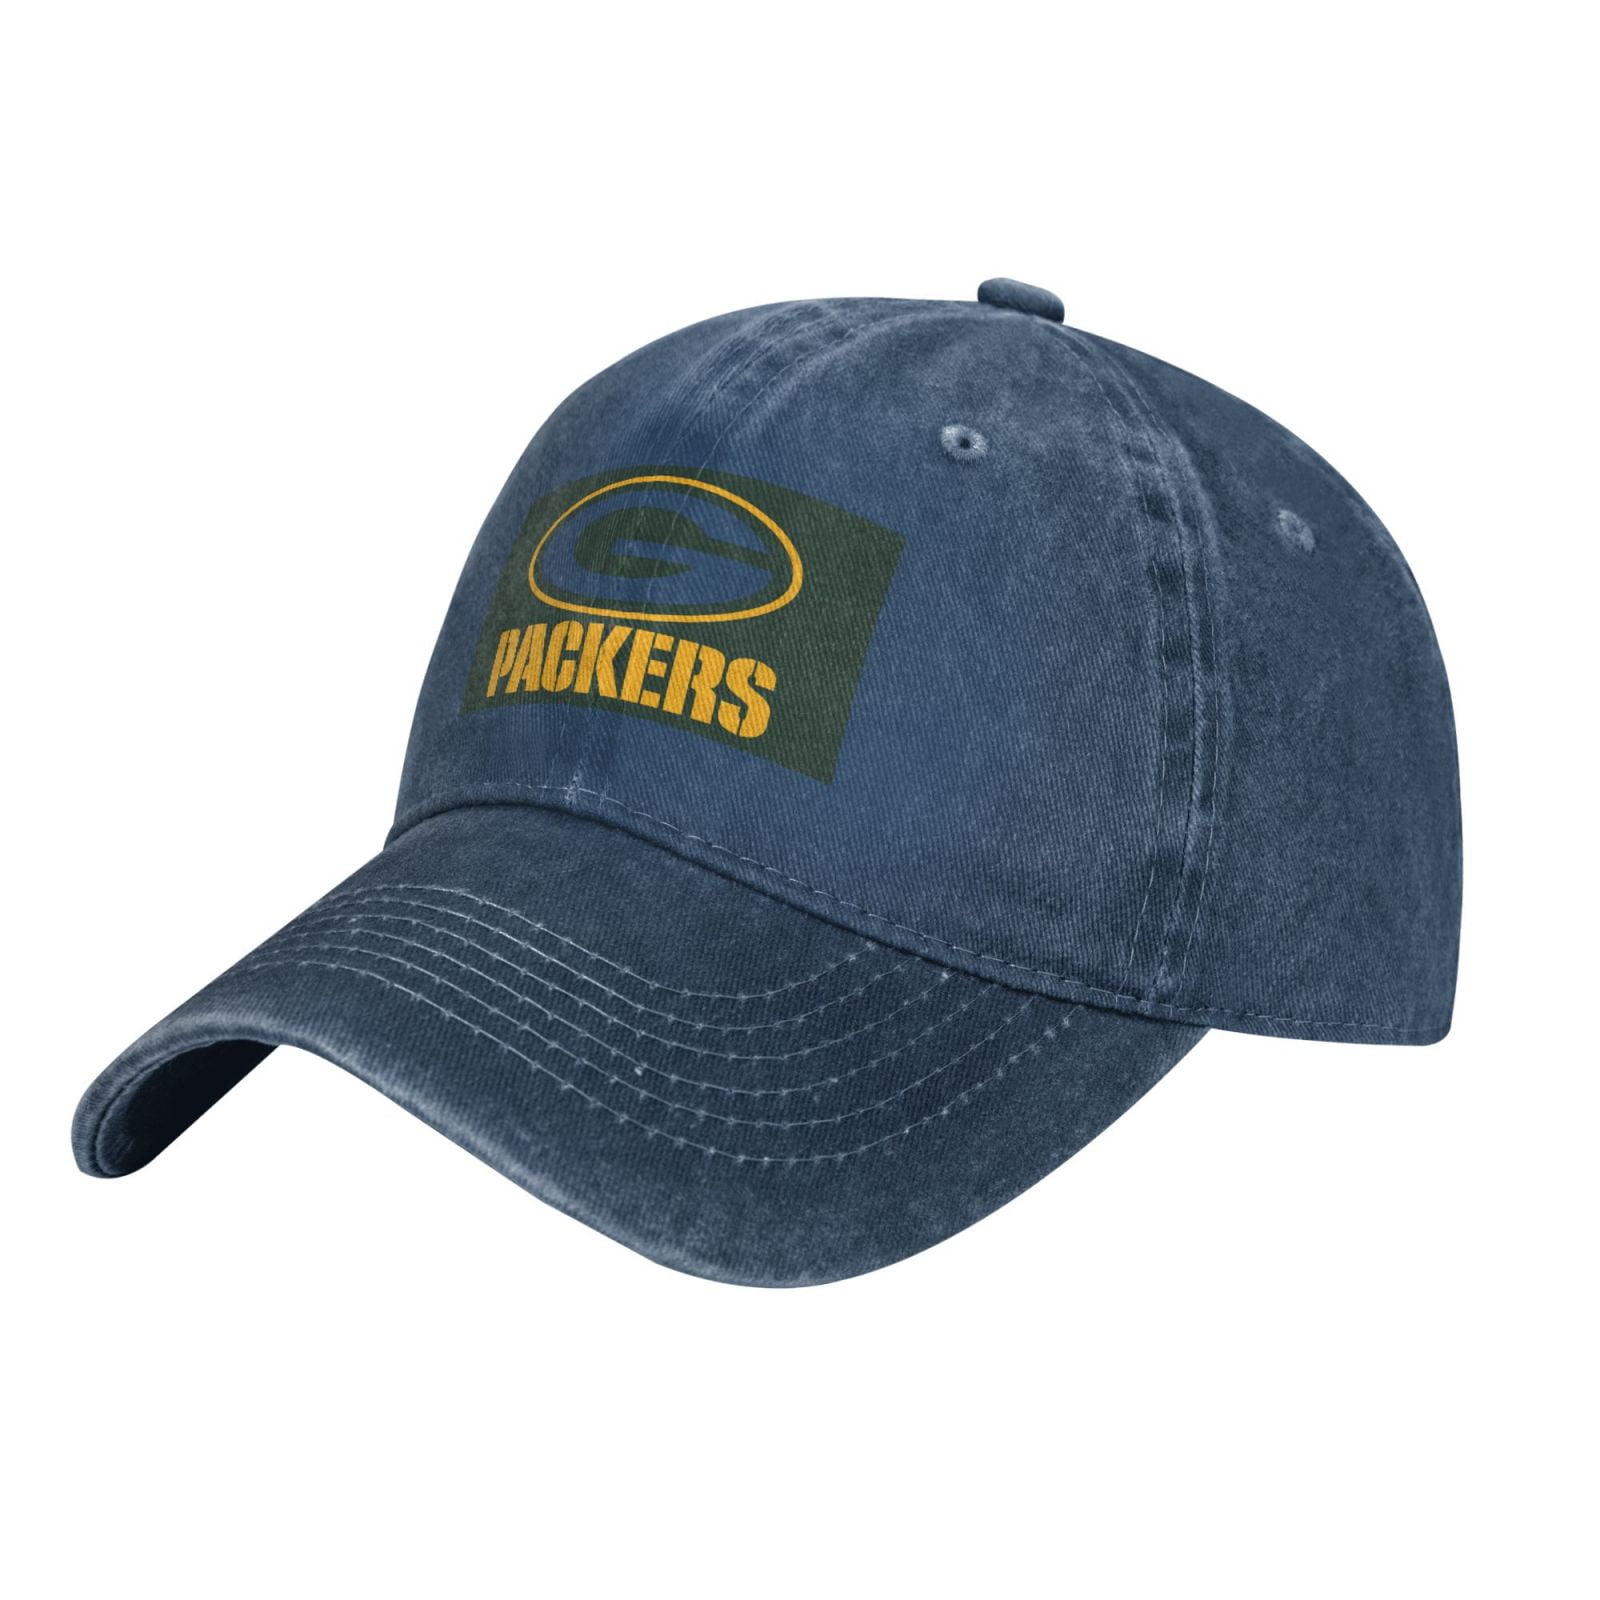 Green-Bay-Packers Baseball Cap Adjustable Hat Sun Shade Peaked Cap ...